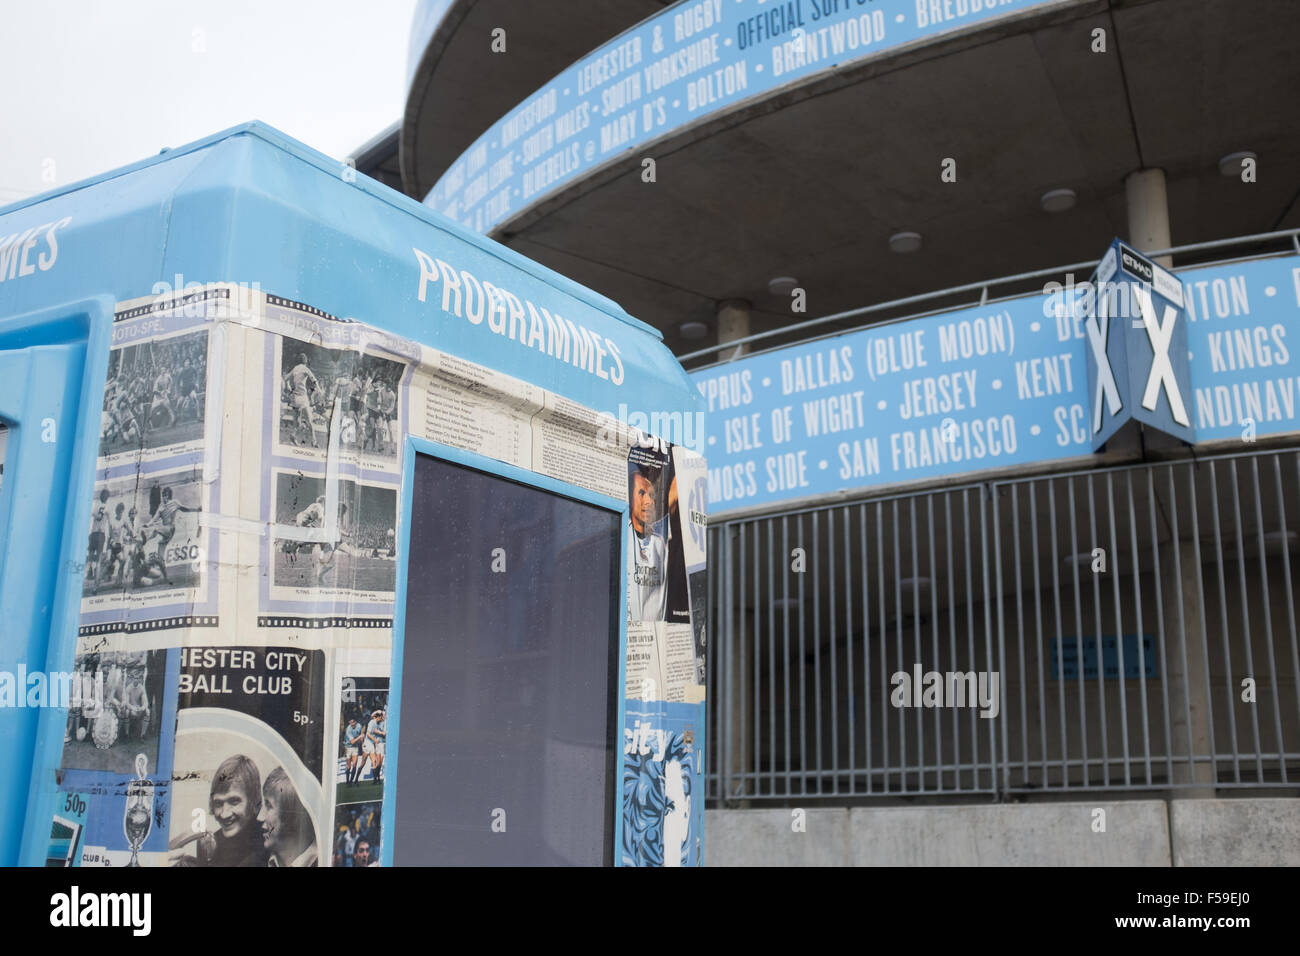 Etihad stadium, Manchester, home of Manchester City FC Stock Photo